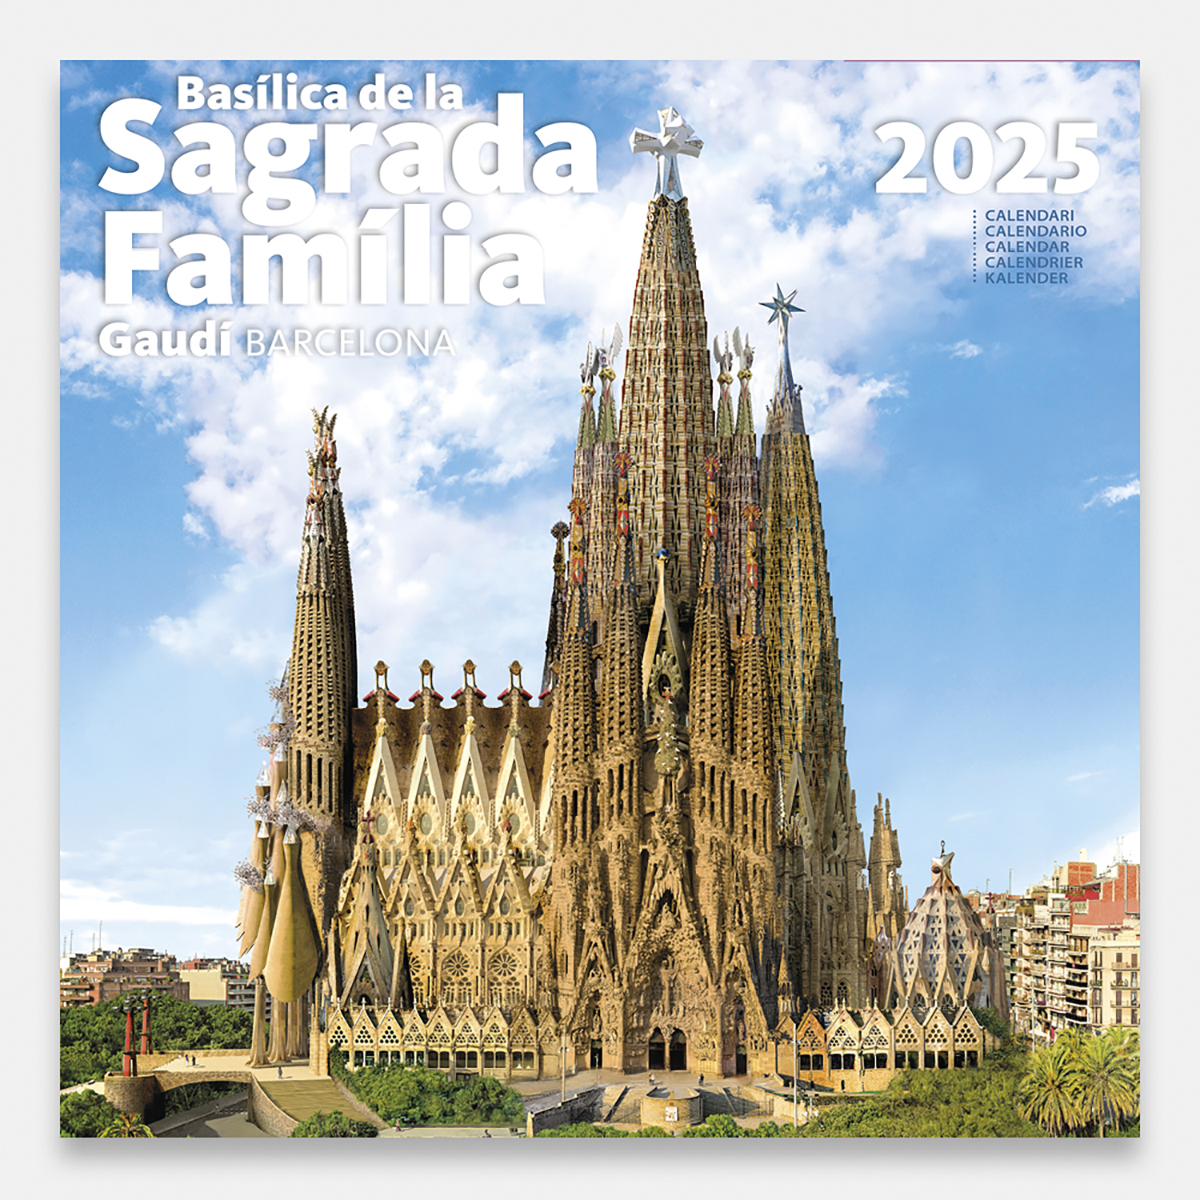 Calendari 2025 Basílica de la Sagrada Família 25sfg1 calendario pared 2025 gaudi sagrada familia